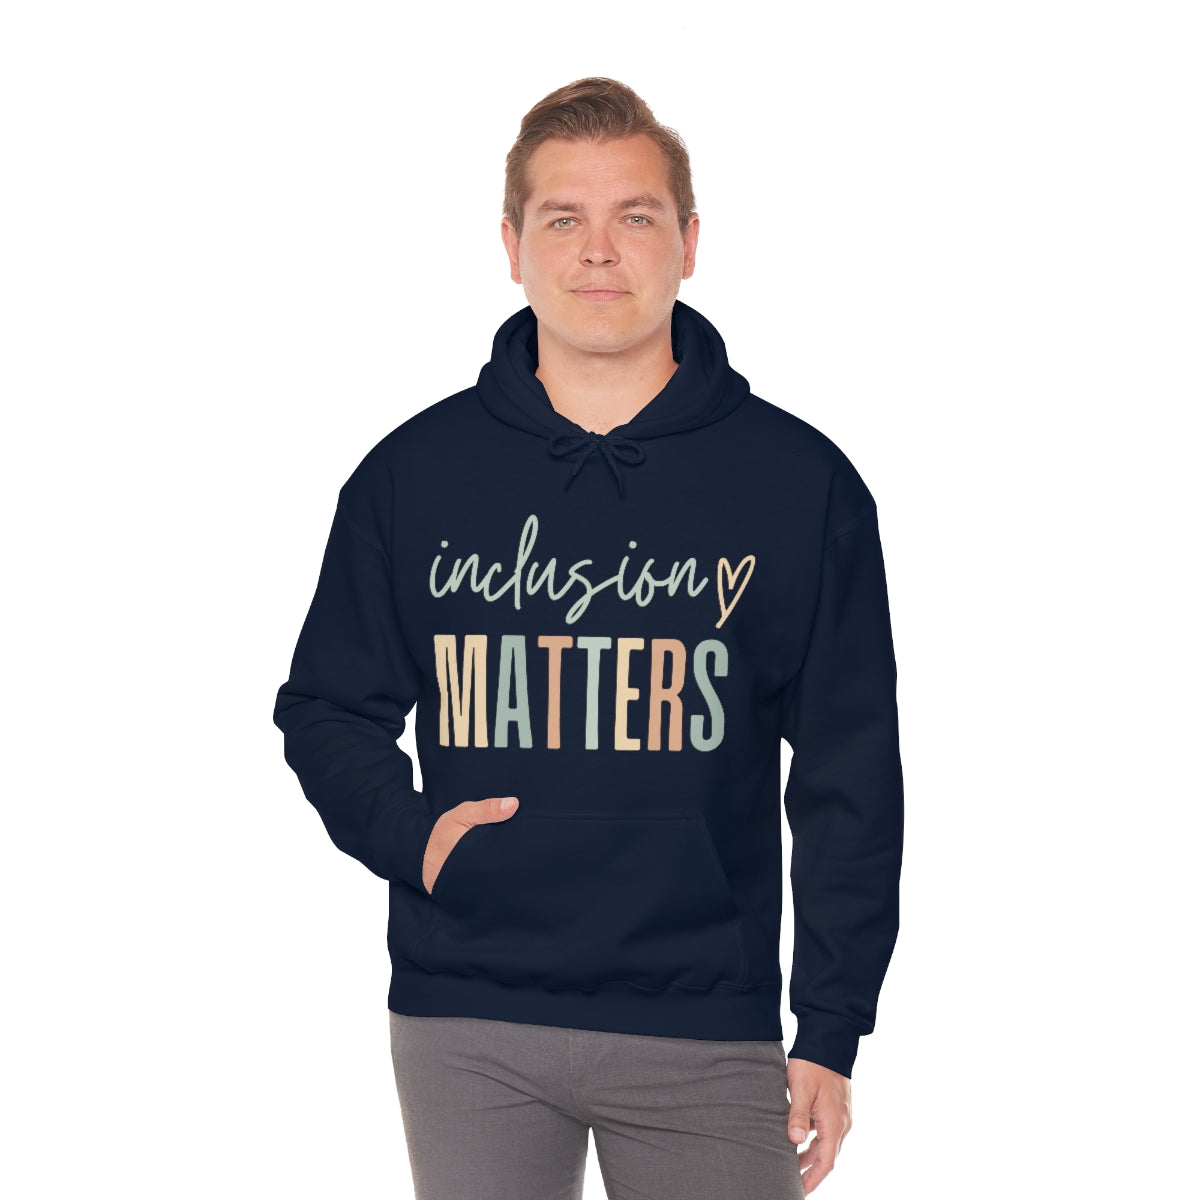 Inclusion Matters Hooded Sweatshirt | Inclusion Matters Hoodie | SPED Teacher | Behavior Therapist | Behavior Analyst